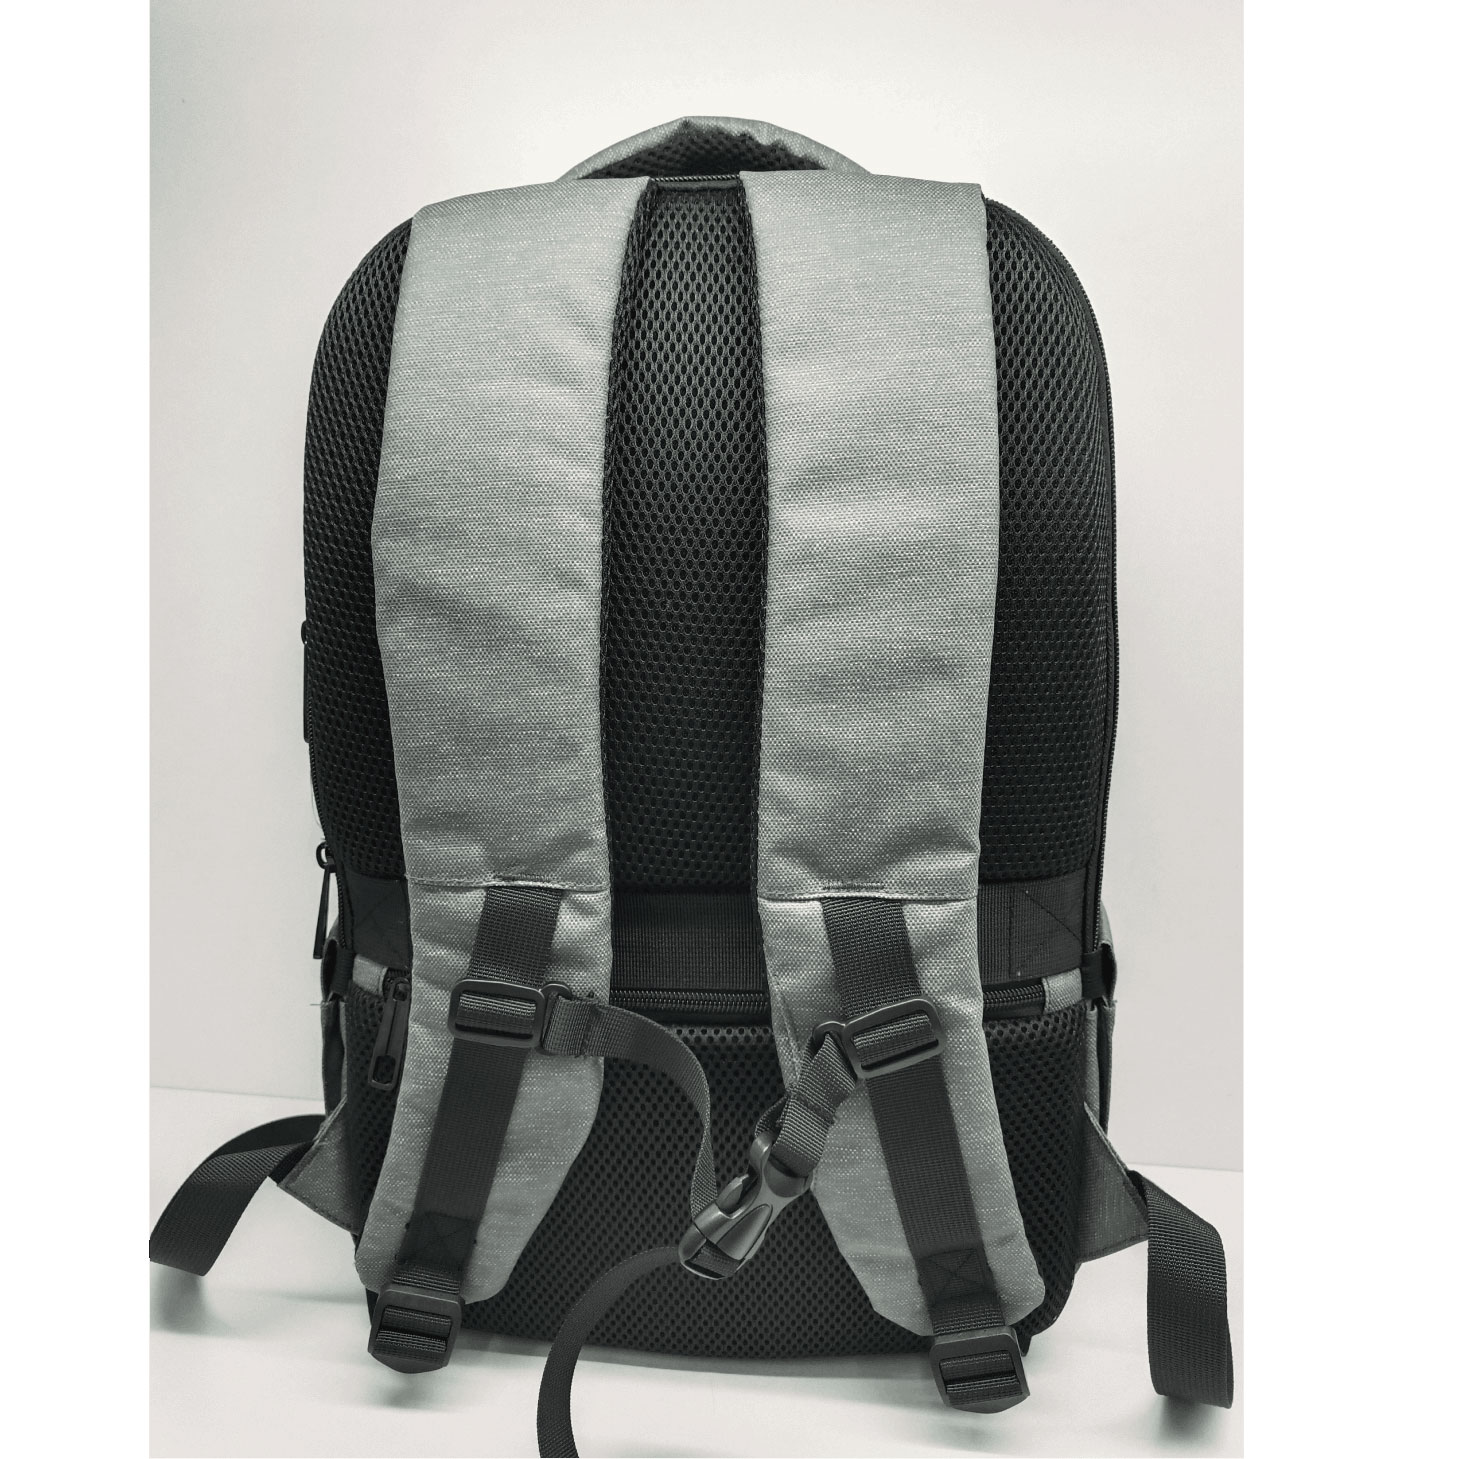 Stylish Laptop Backpacks for Work